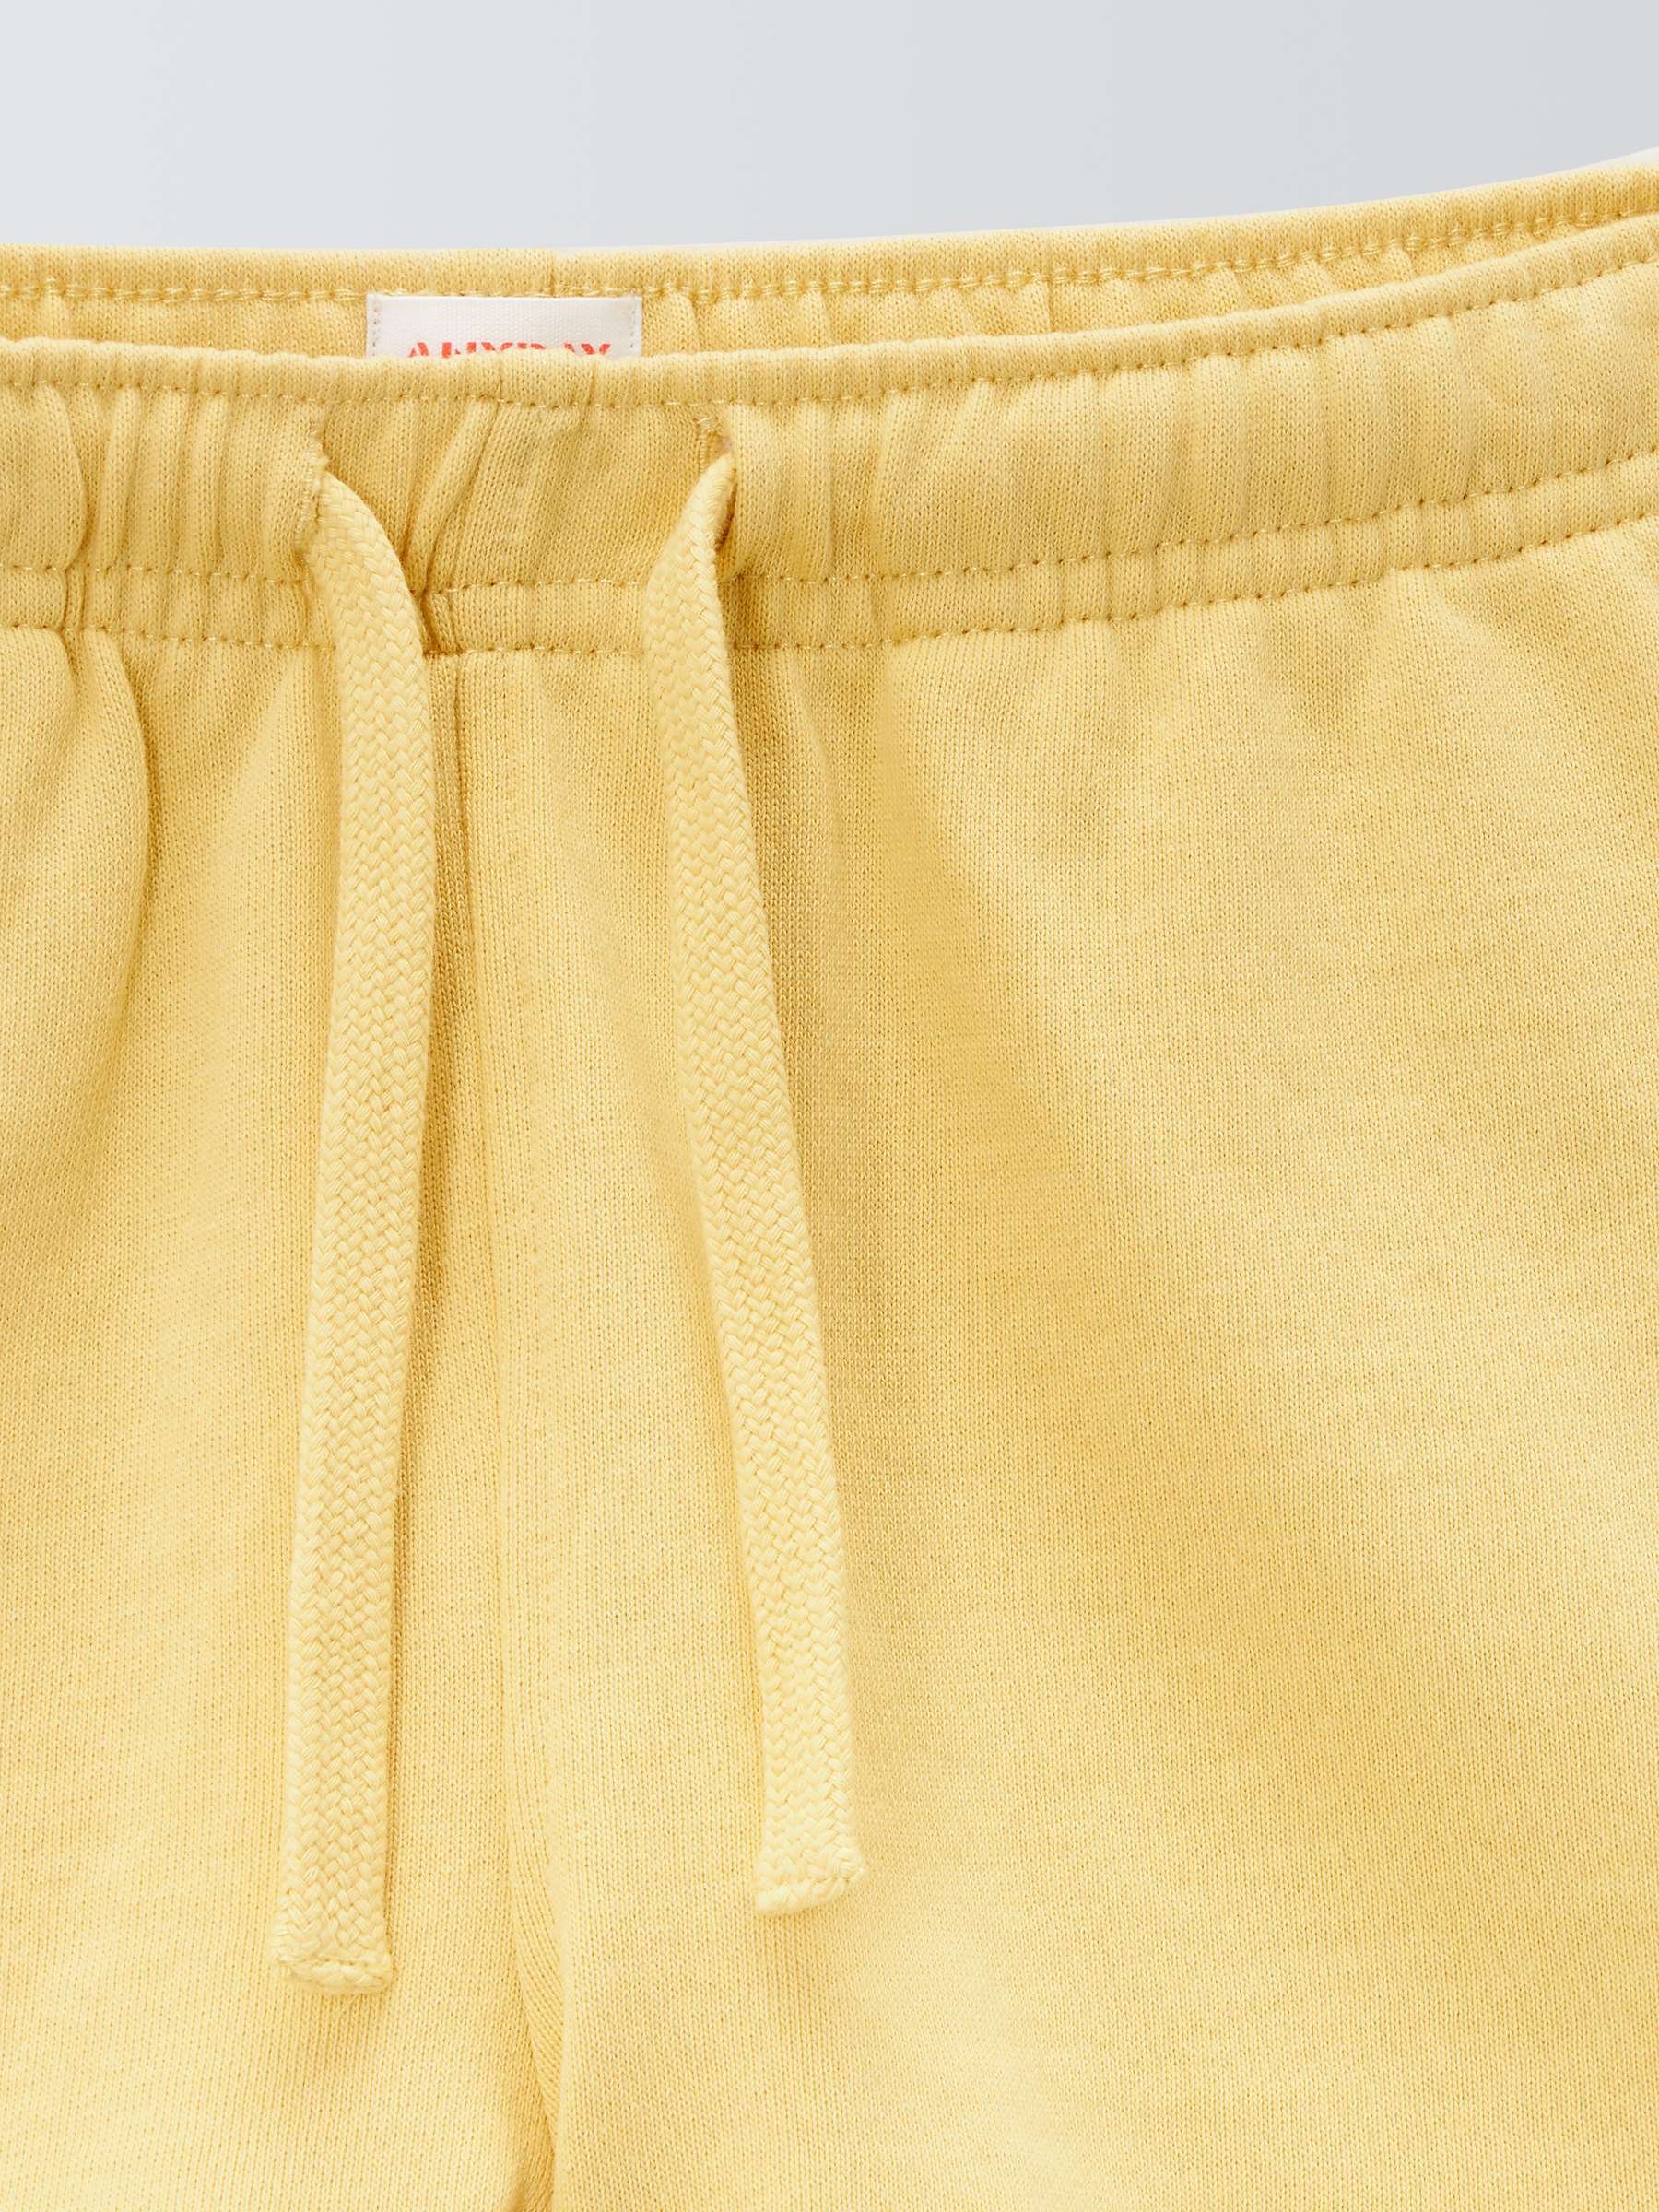 Buy John Lewis ANYDAY Kids' Cotton Shorts, Sundress Online at johnlewis.com